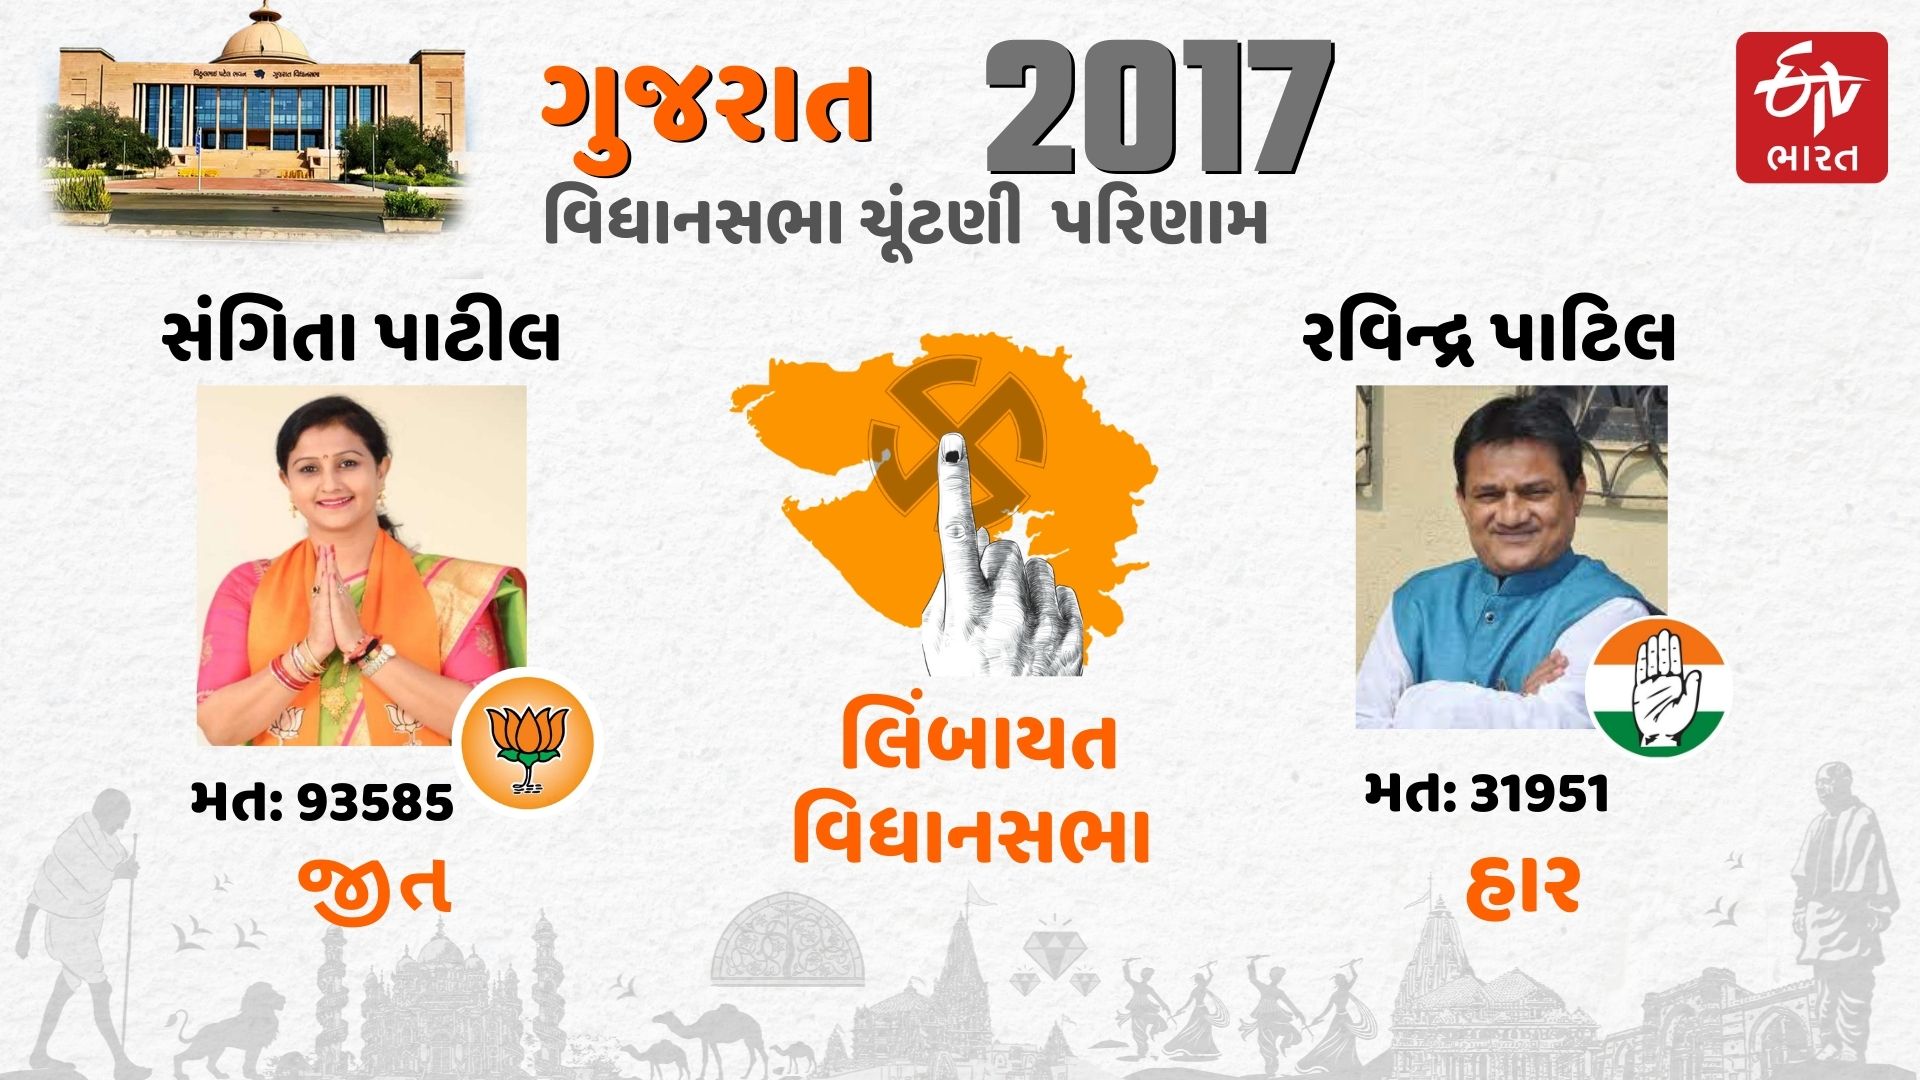 Gujarat Election 2022 Counting Day Surat Assembly seat Limbayat Result Sangita Patil